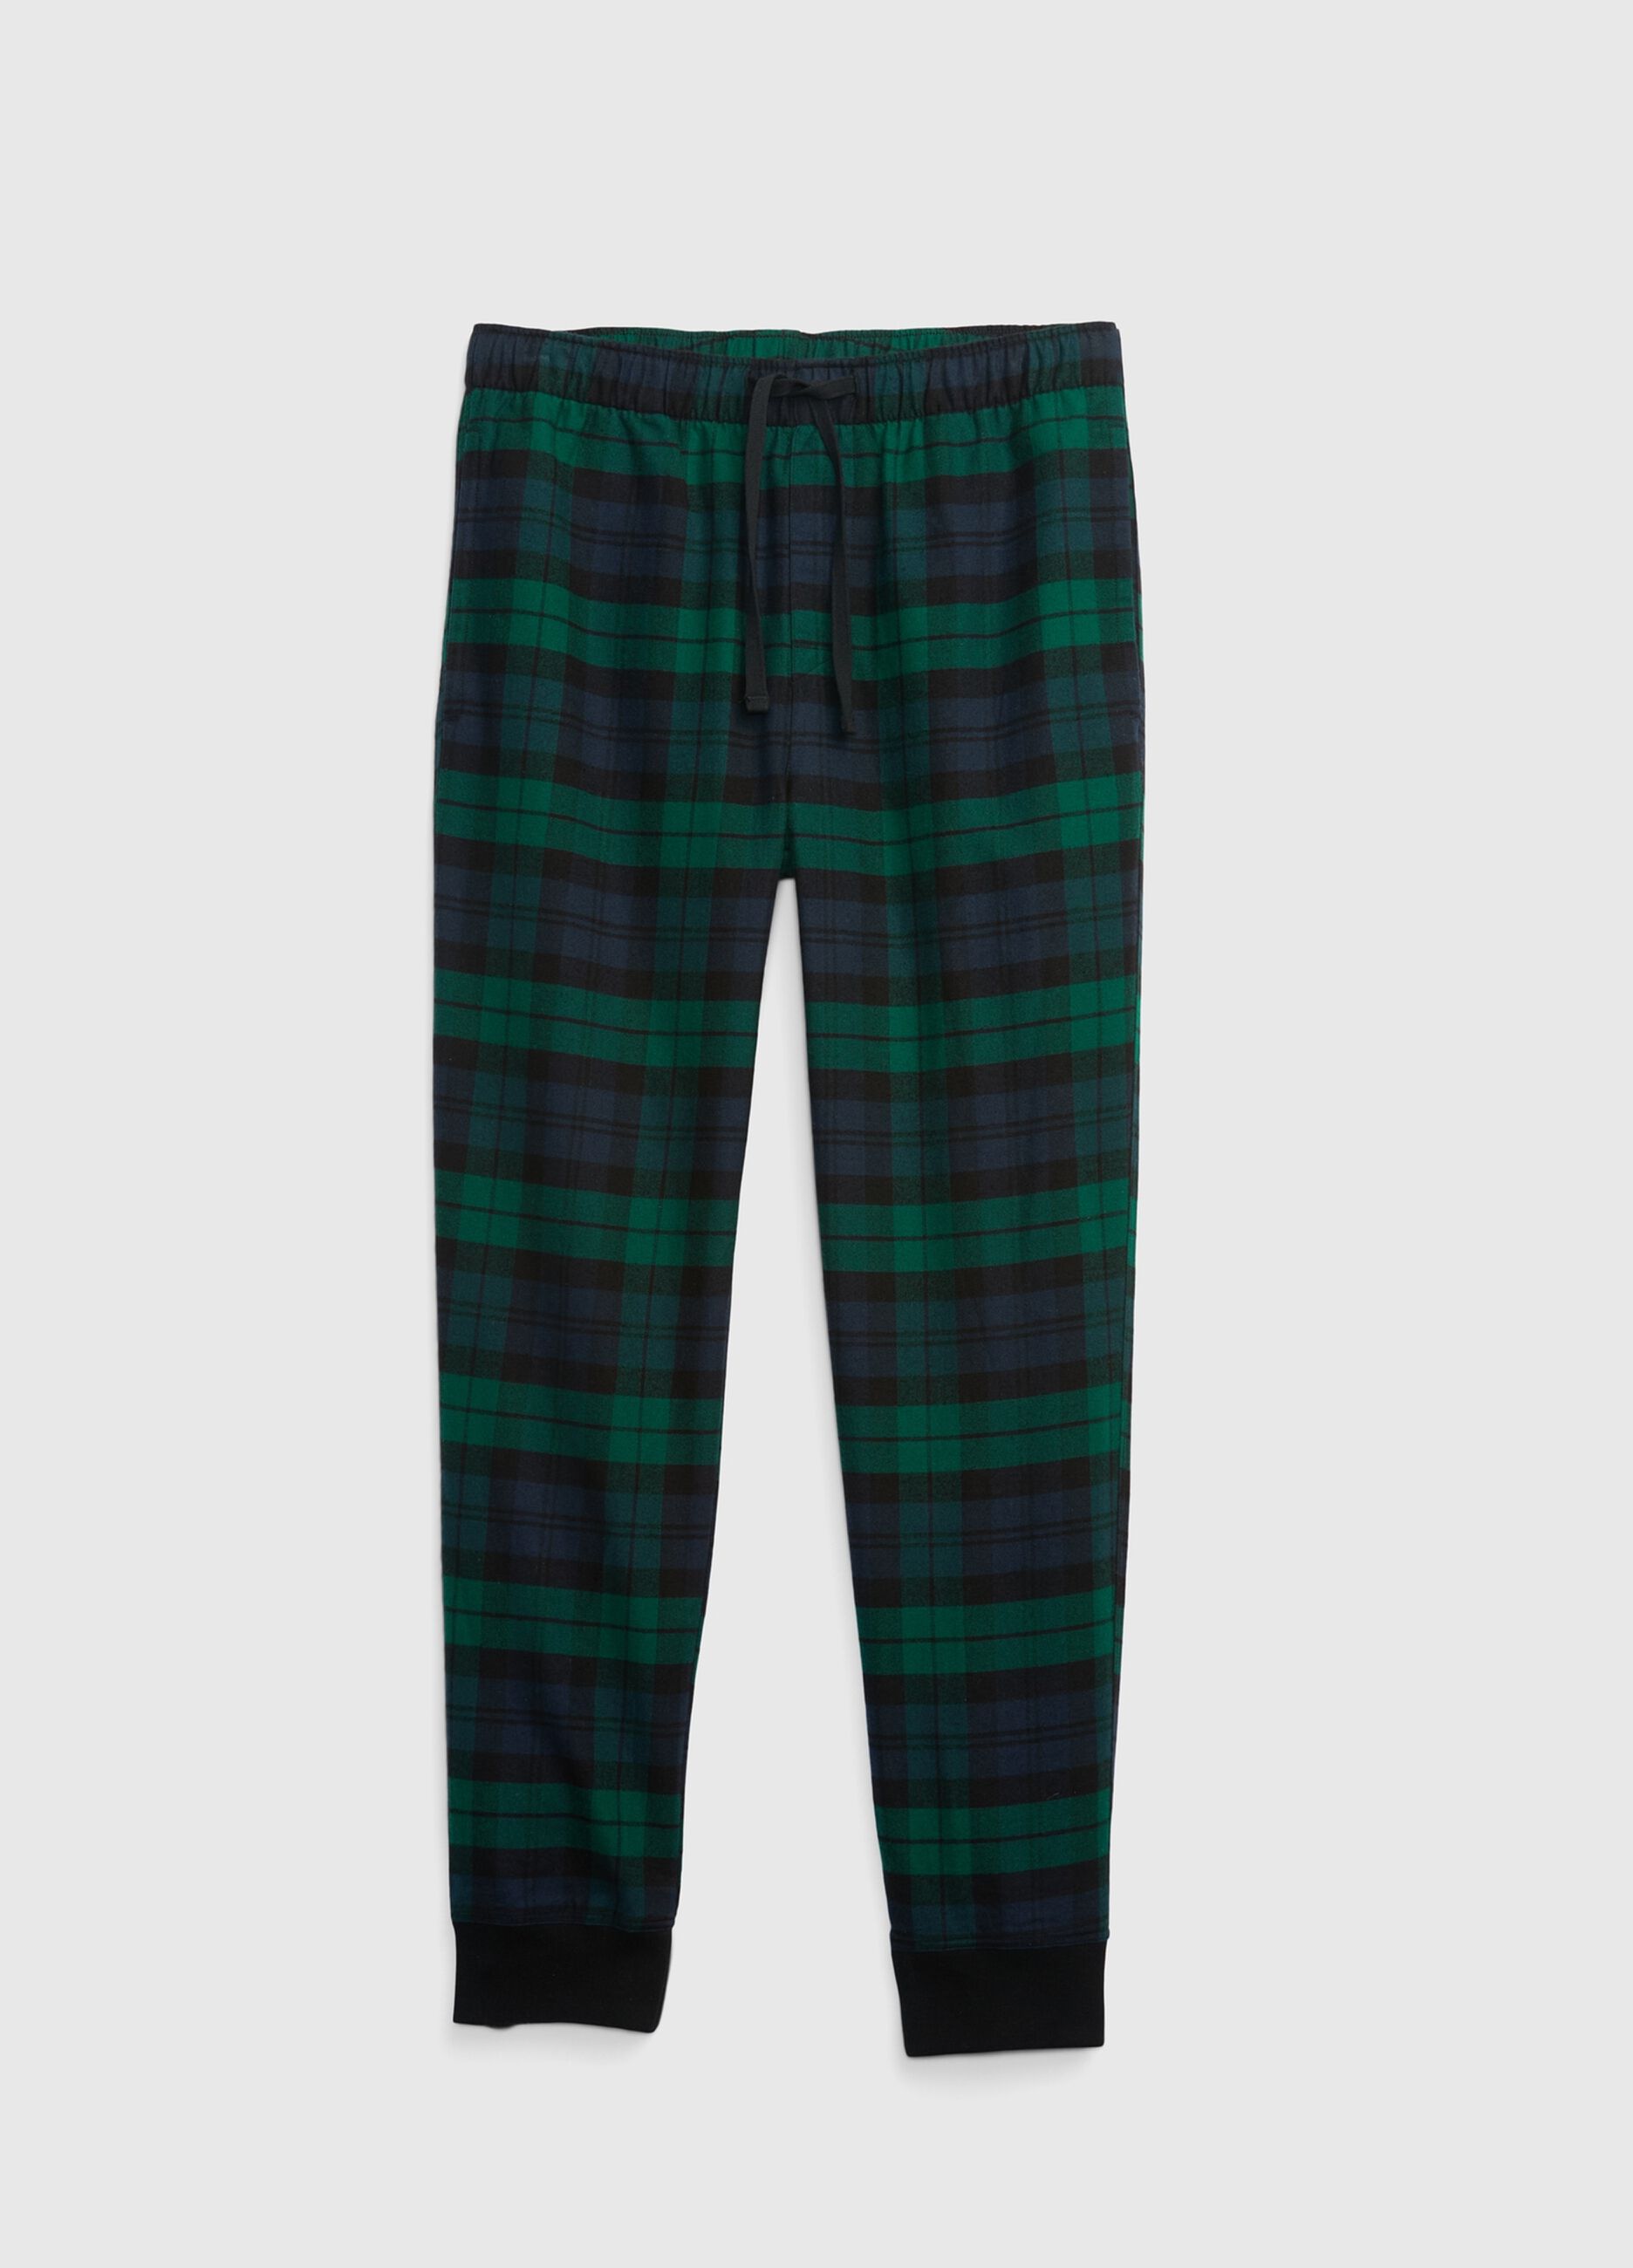 Tartan pyjama bottoms